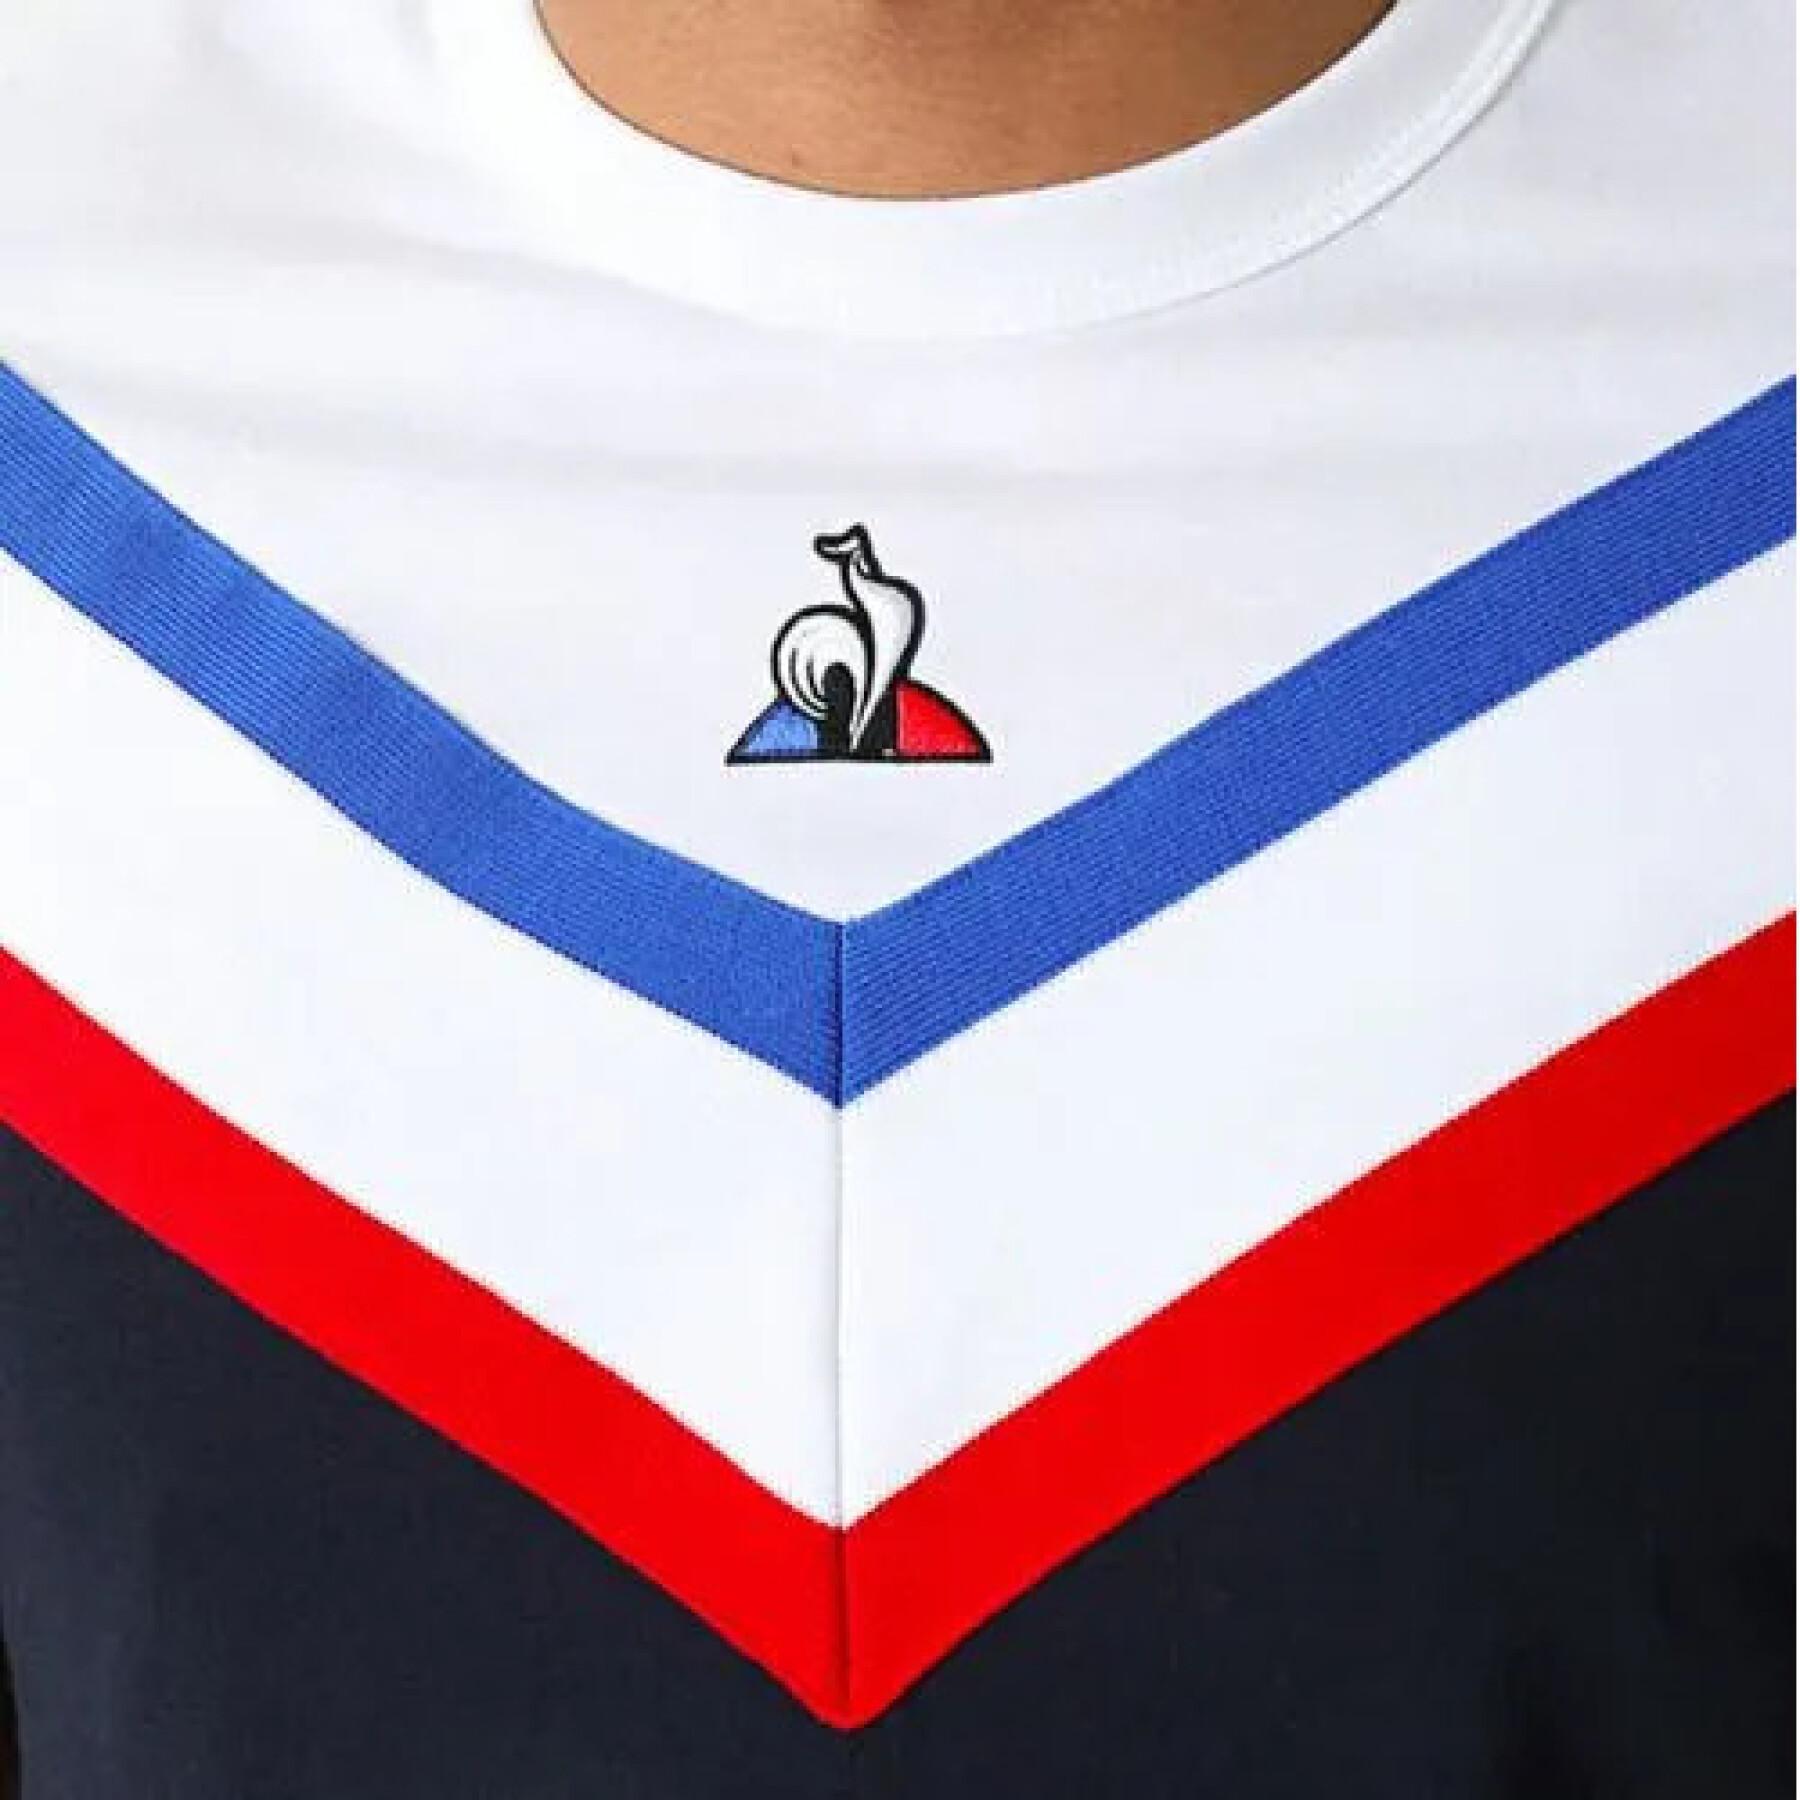 T-shirt Le Coq Sportif tricolore n°1